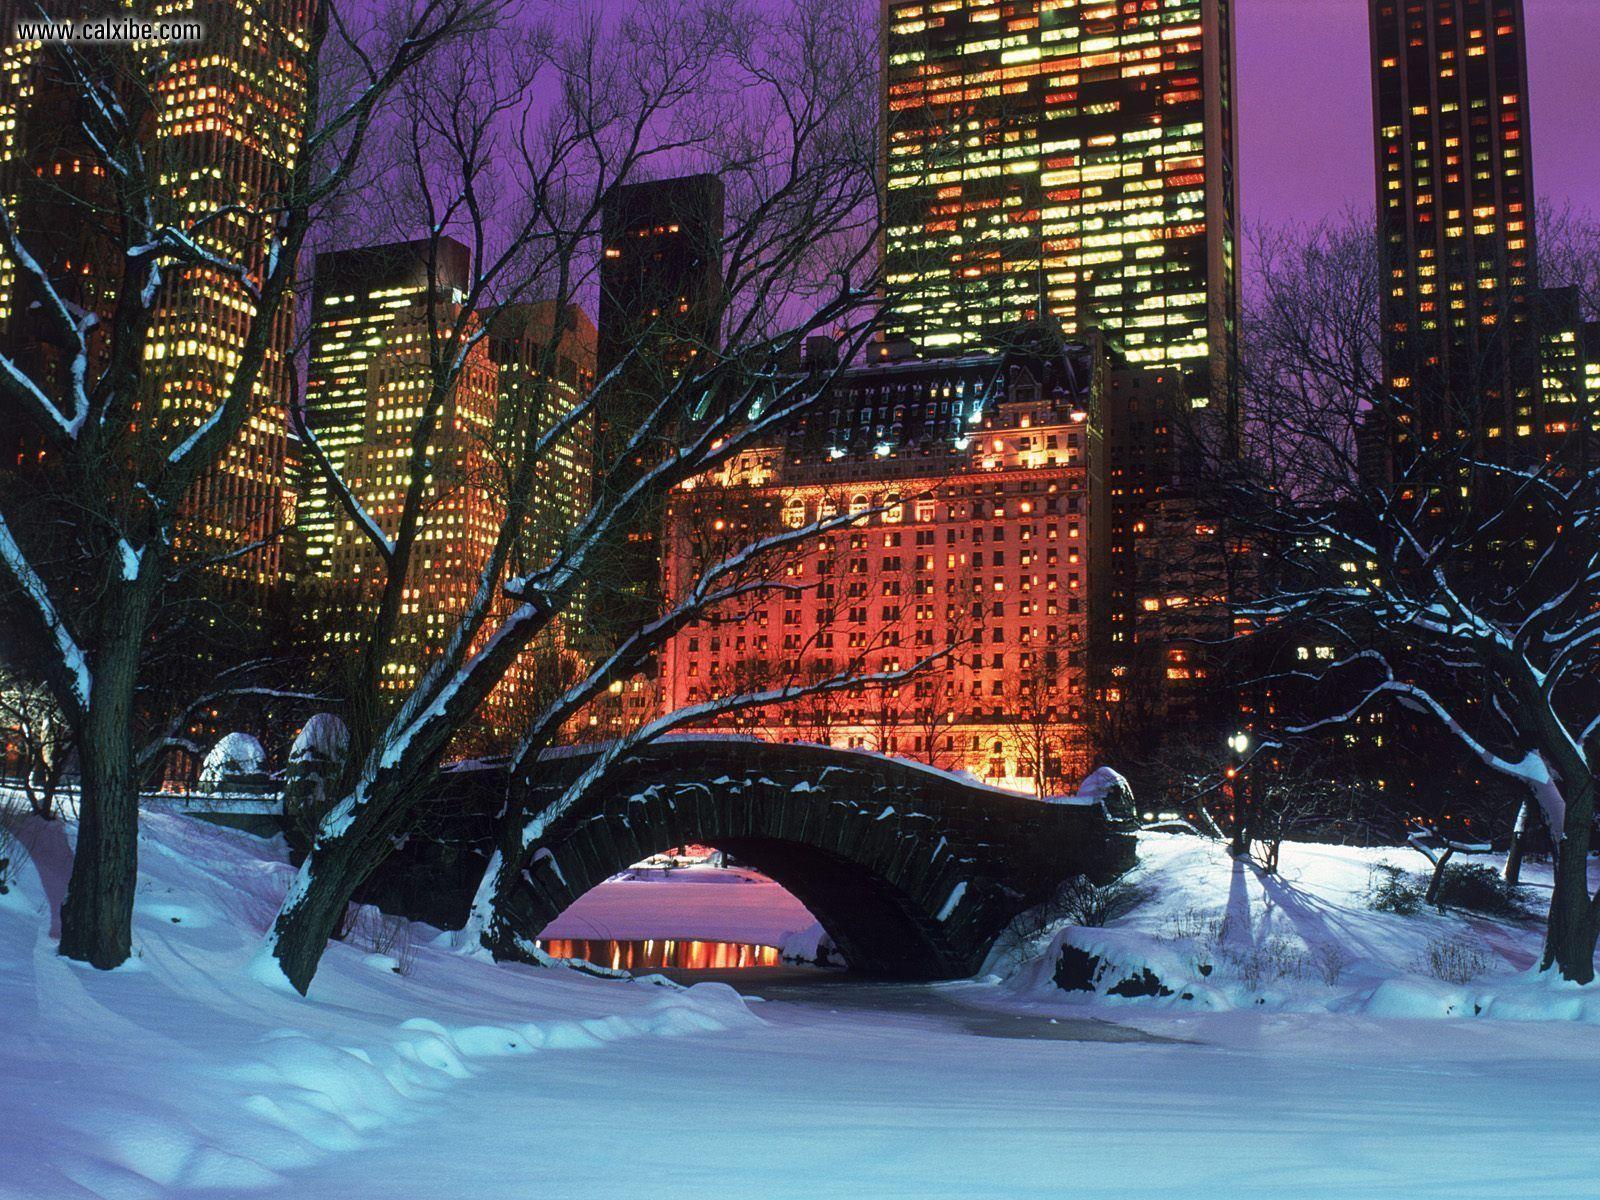 Buildings City Central Park In Winter New York Desktop Night